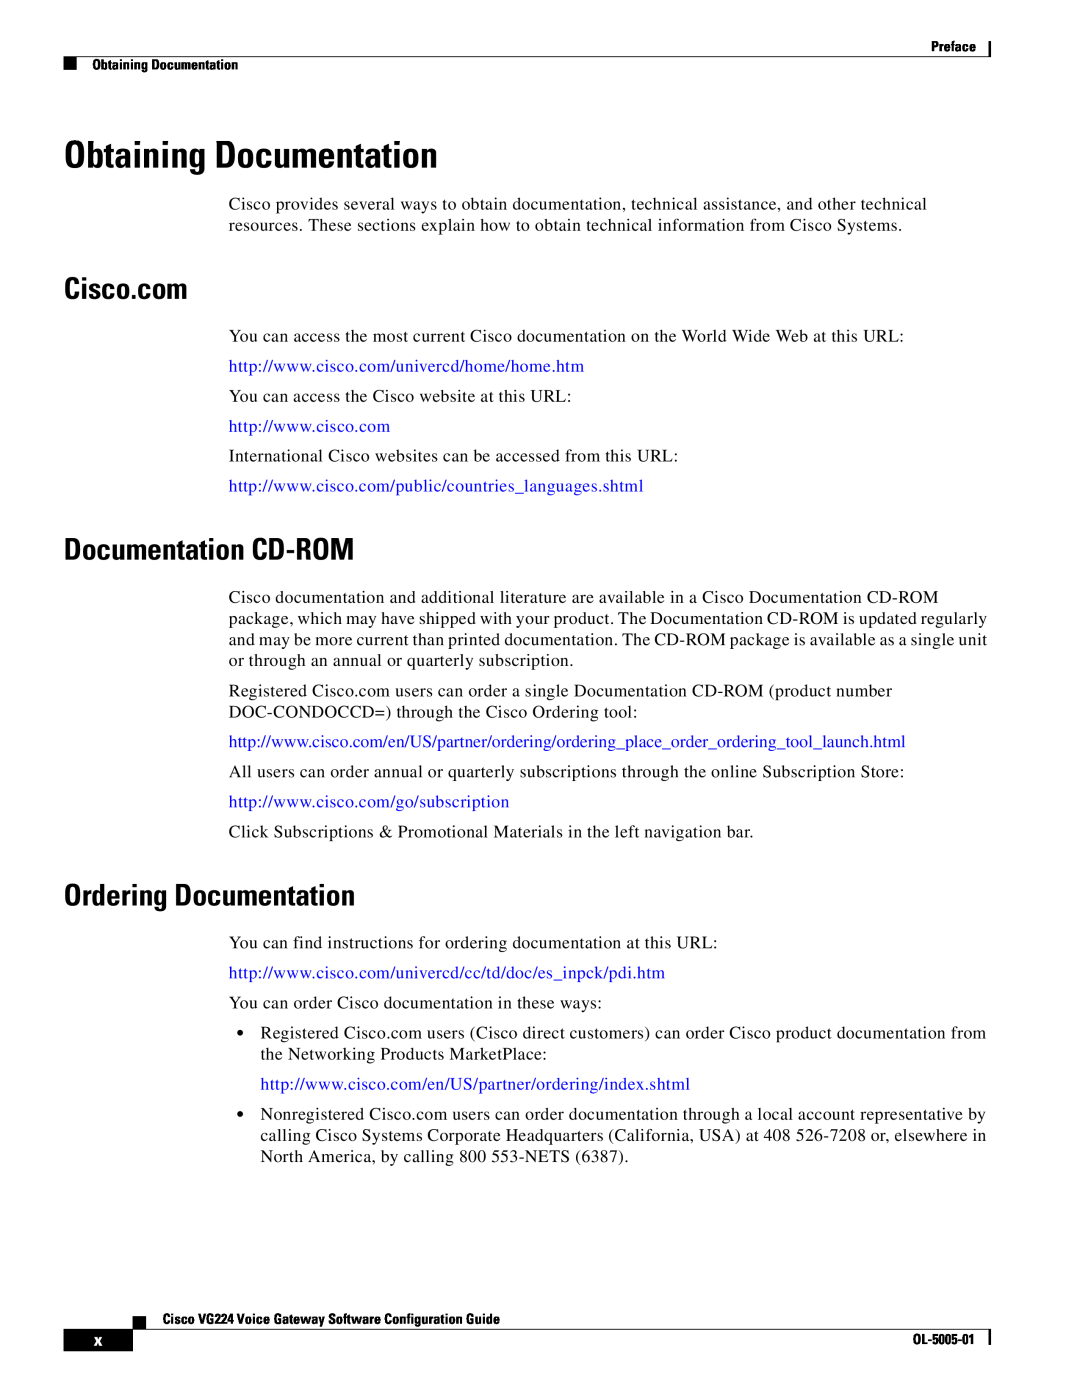 Cisco Systems VG224 manual Obtaining Documentation, Cisco.com, Documentation CD-ROM, Ordering Documentation 